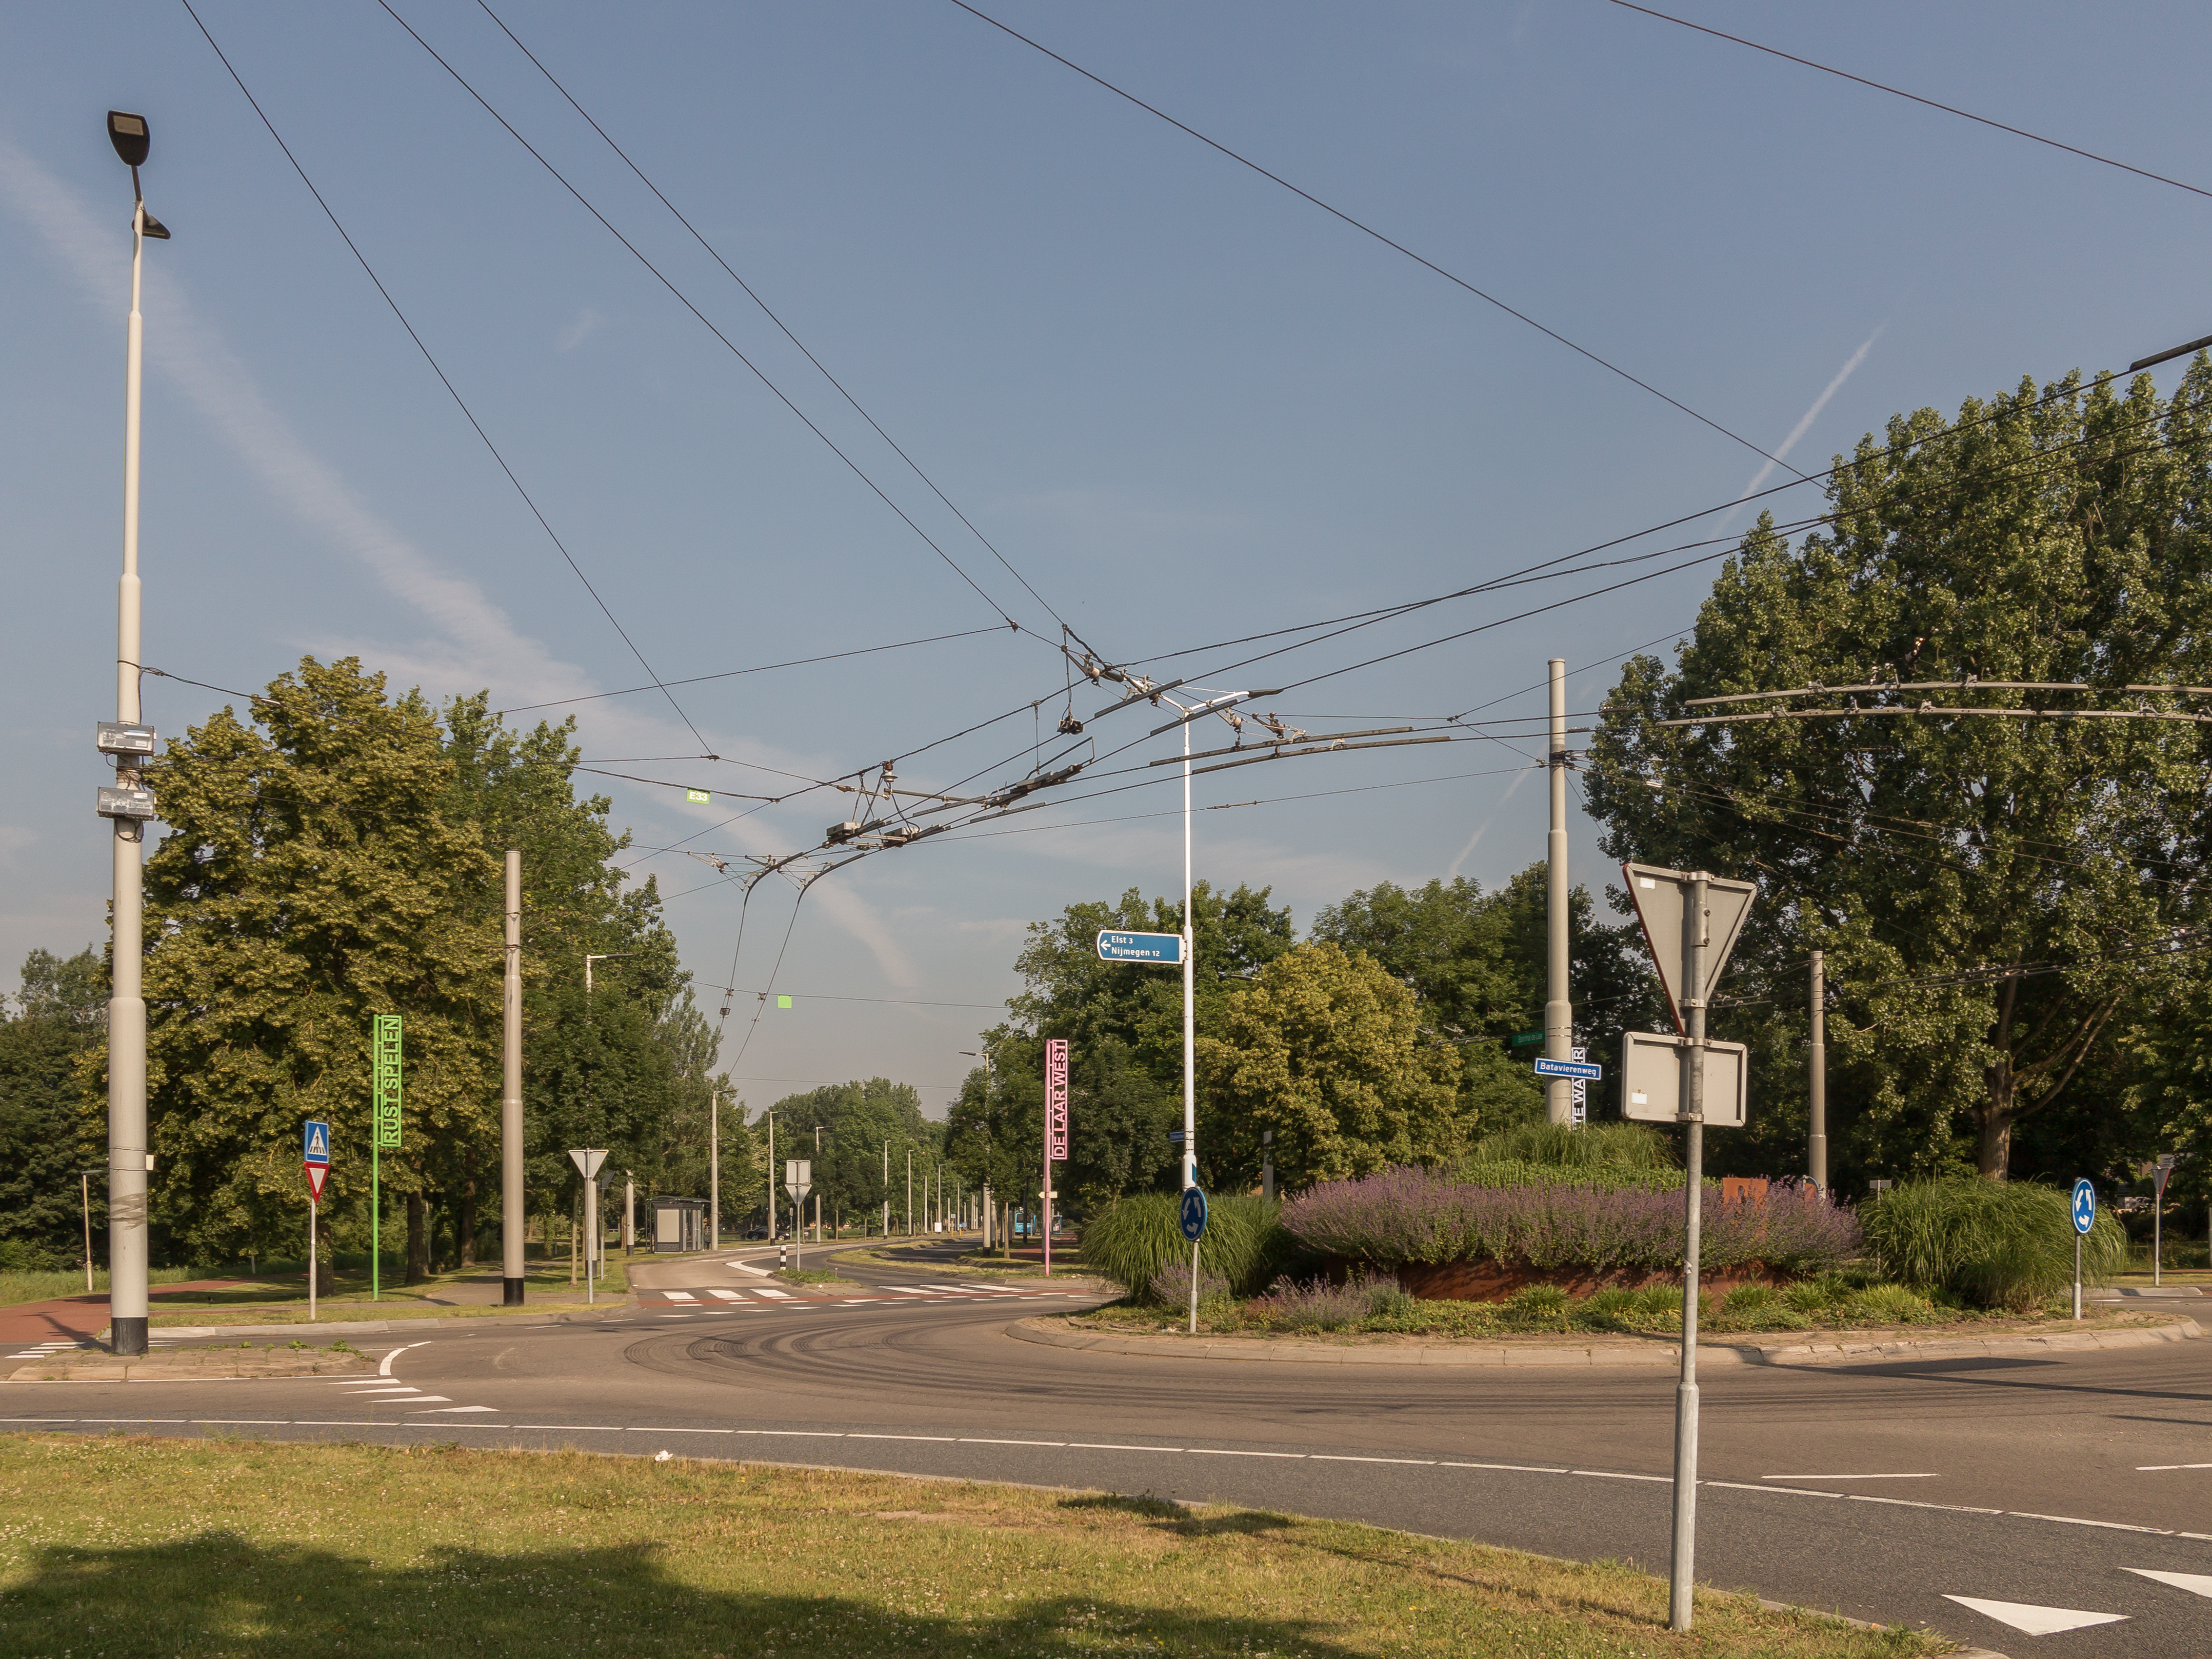 Acht Beschikbaar morgen Bestand:Arnhem-de Laar, rotonde Brabantweg-Batavierenweg-Randweg foto3 2015- 06-25 09.17.jpg - Wikipedia